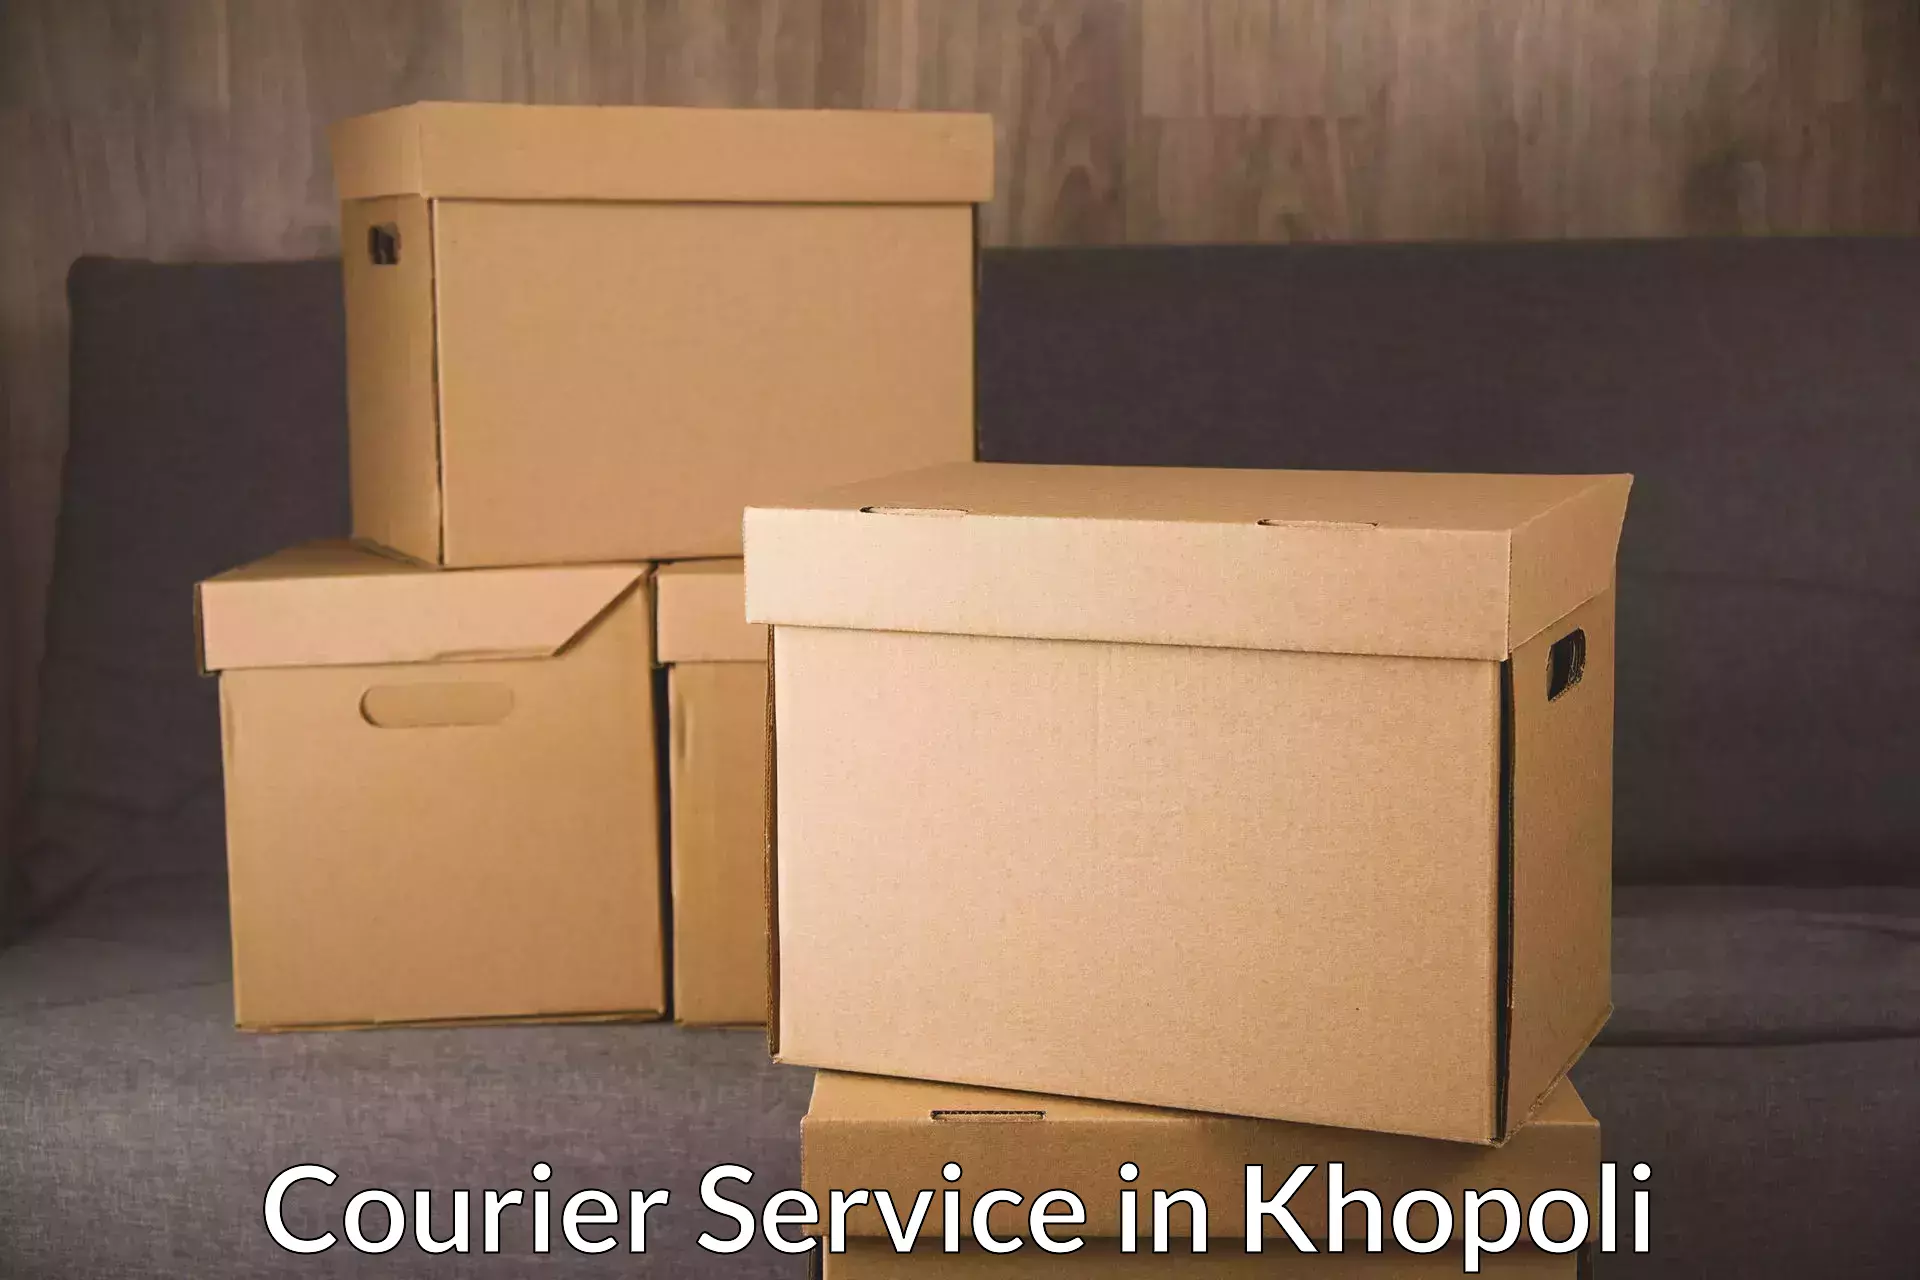 Express courier capabilities in Khopoli